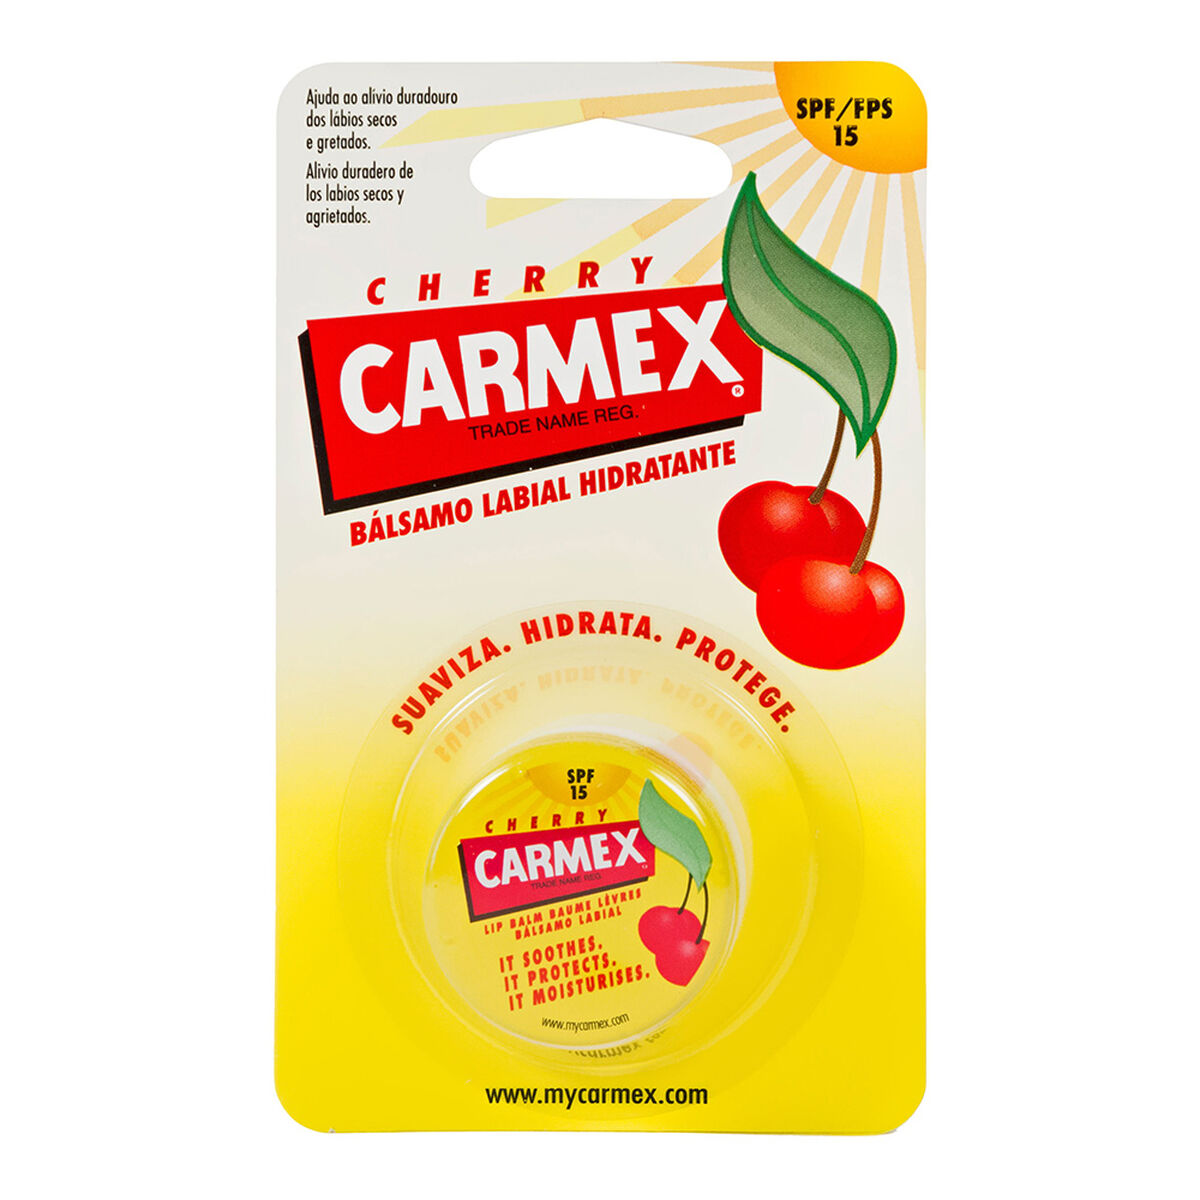 Бальзам для губ Carmex Cherry Spf 15 (7,5 g)